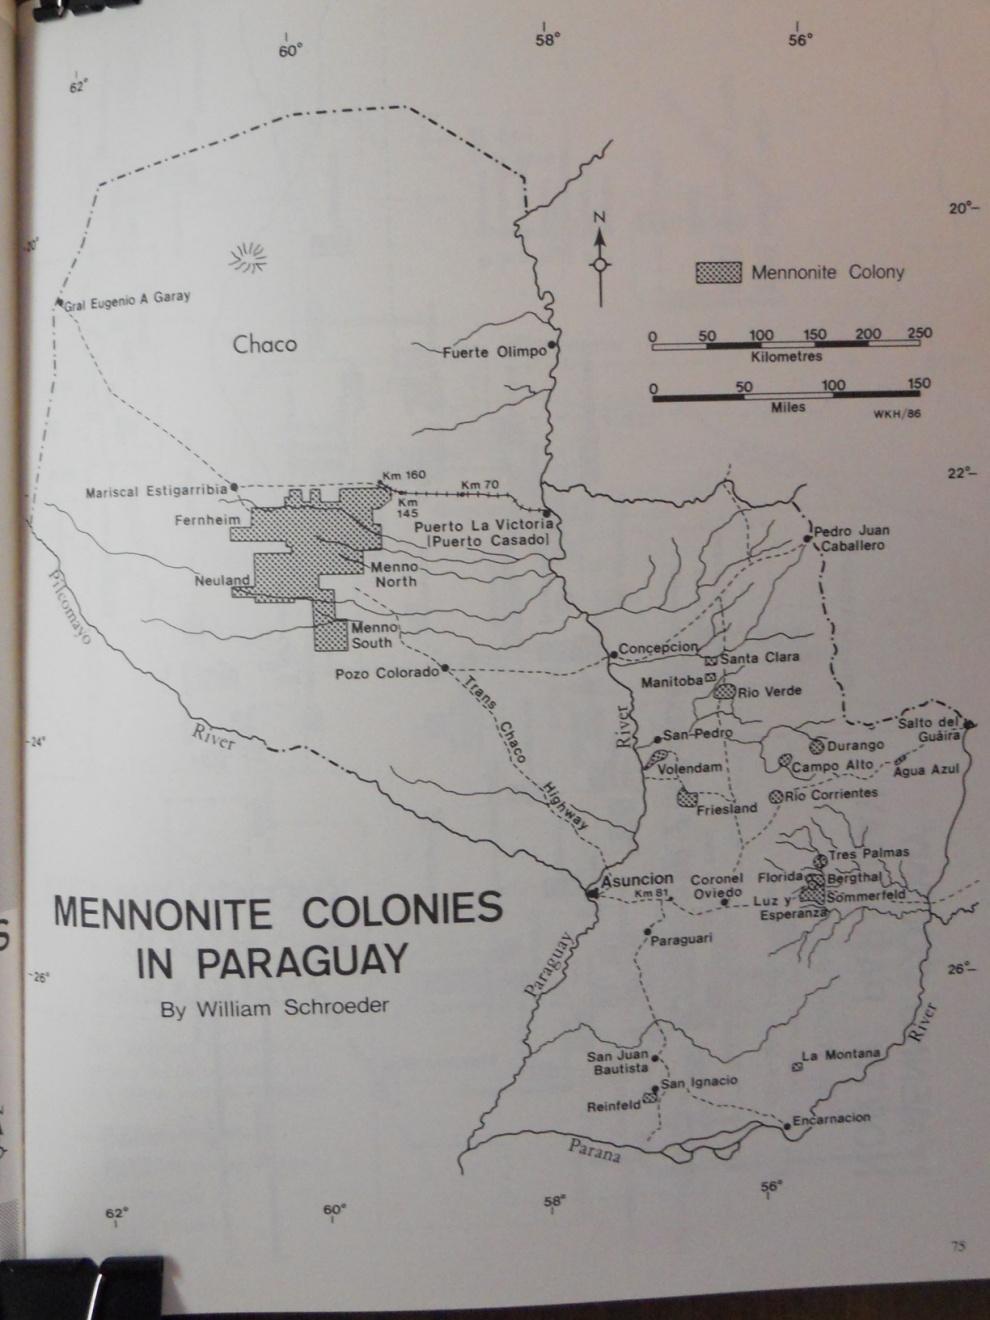 Mennonite colonies, Paraguay (Menn.